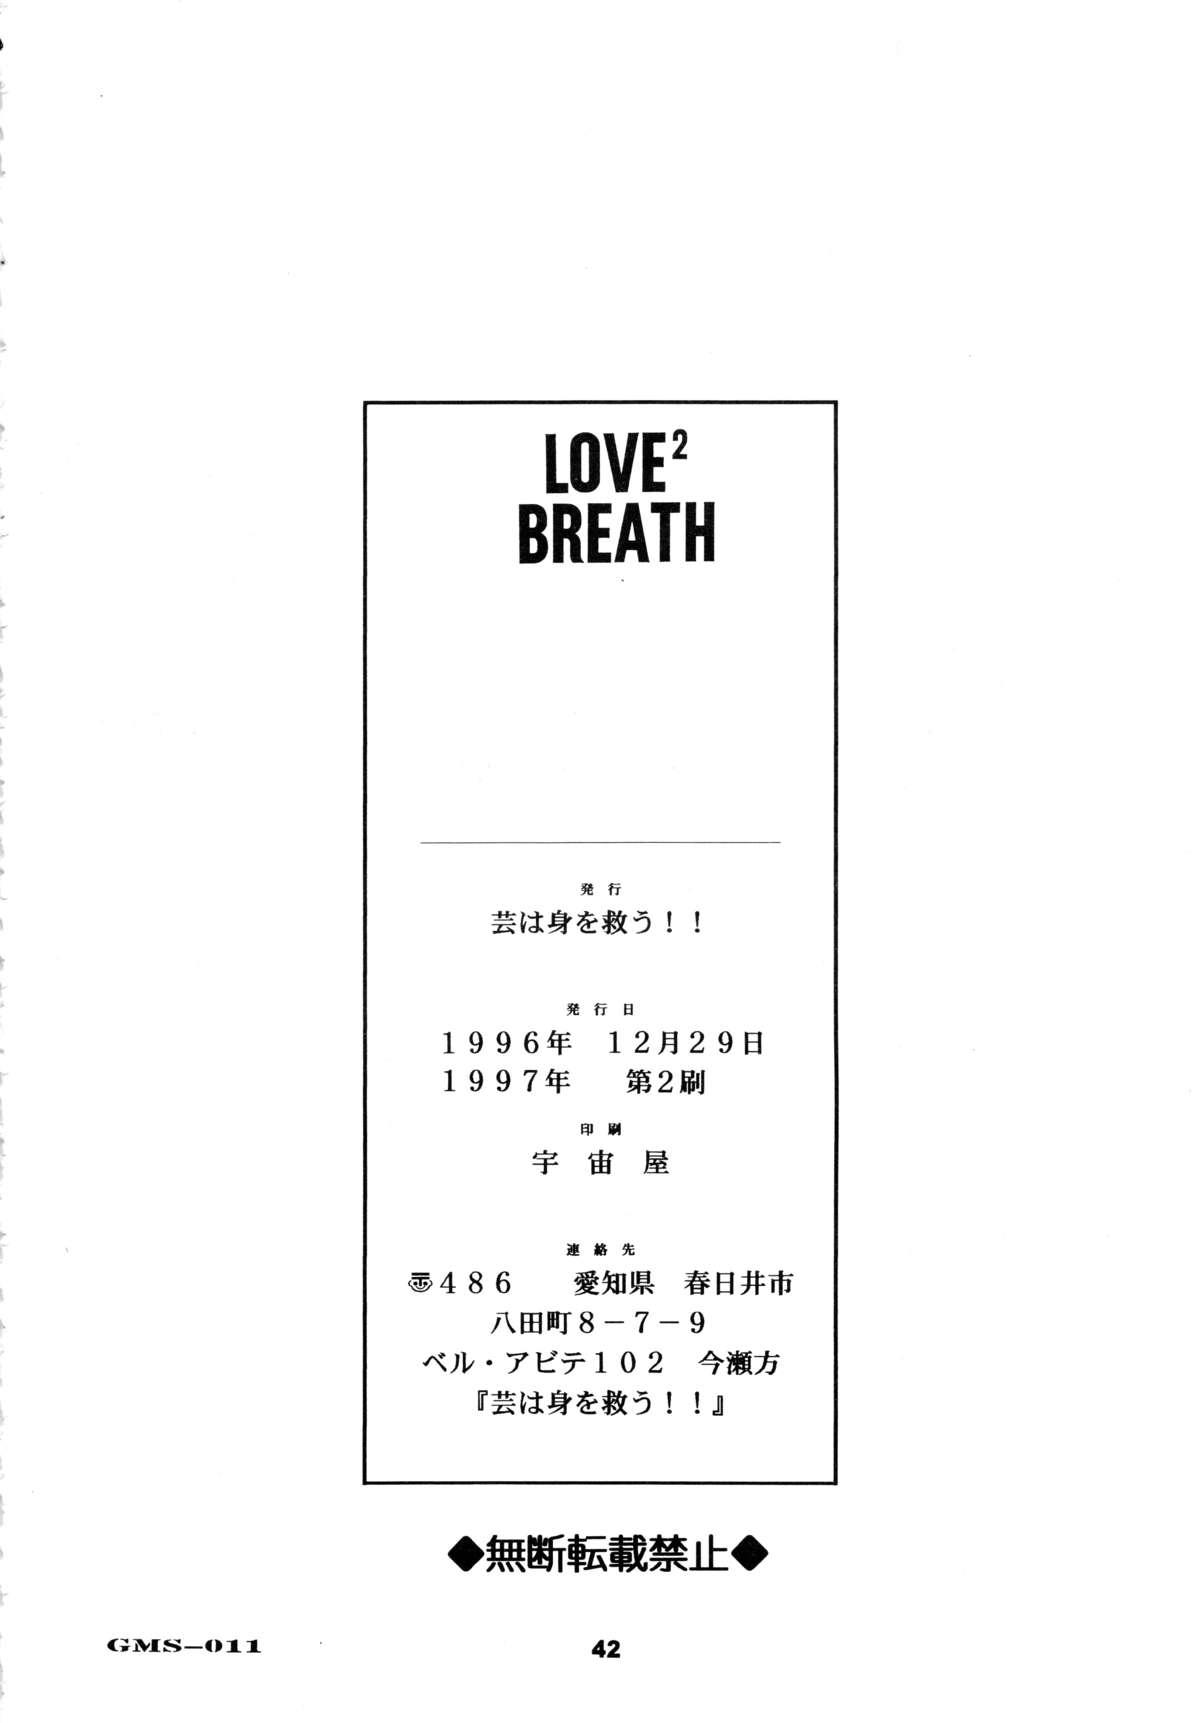 Best Blowjob LOVE² BREATH - Sakura taisen Martian successor nadesico Tokimeki memorial Youre under arrest Baile - Page 42